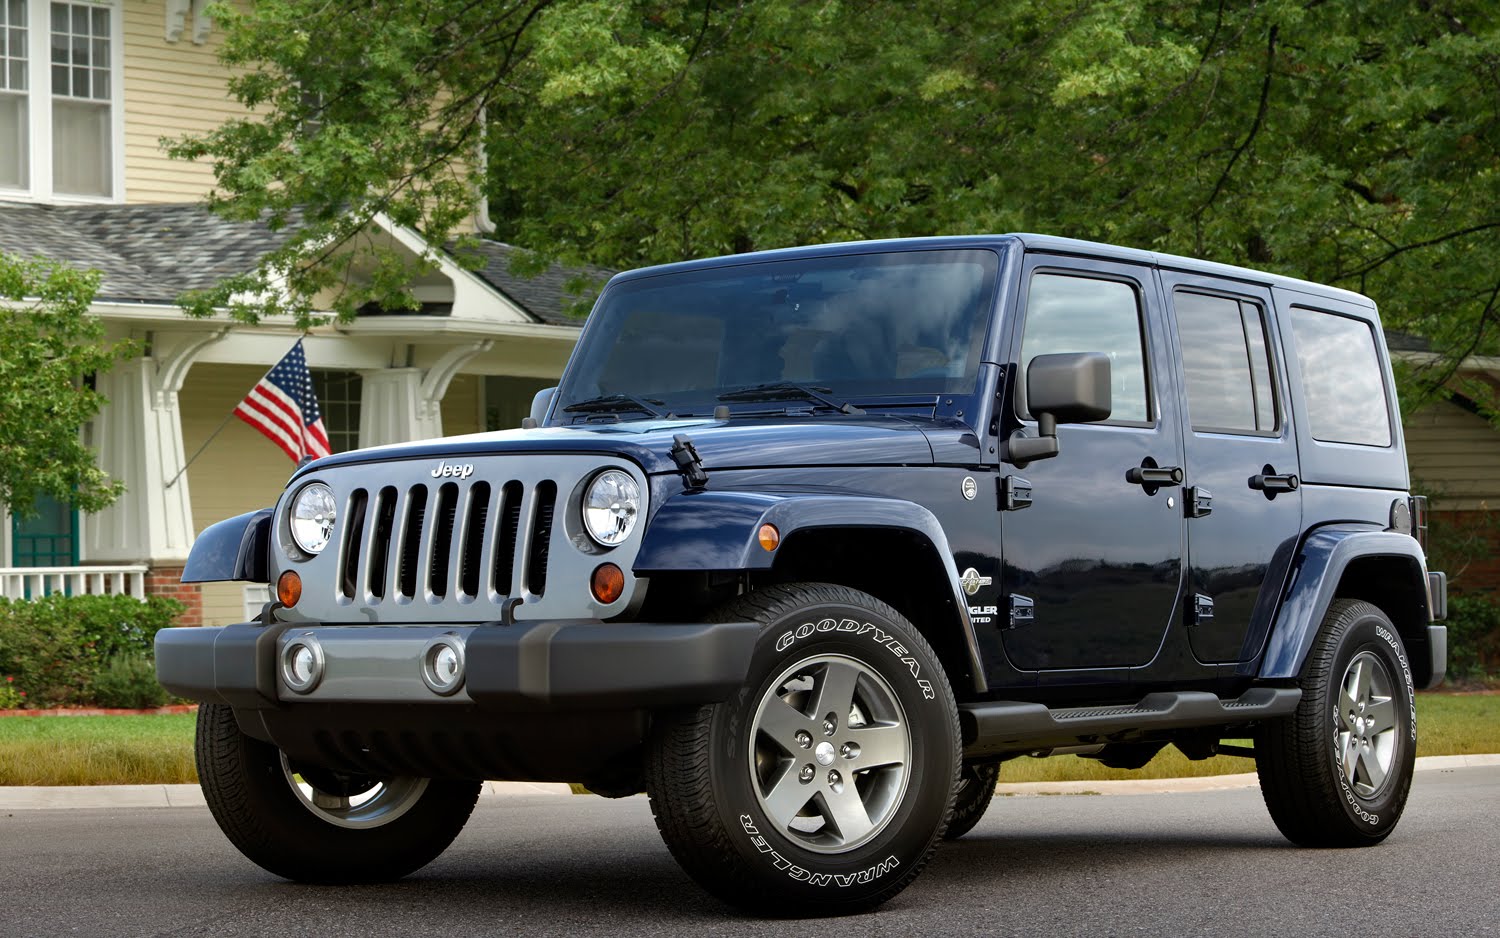 2012 Freedom edition jeep #3